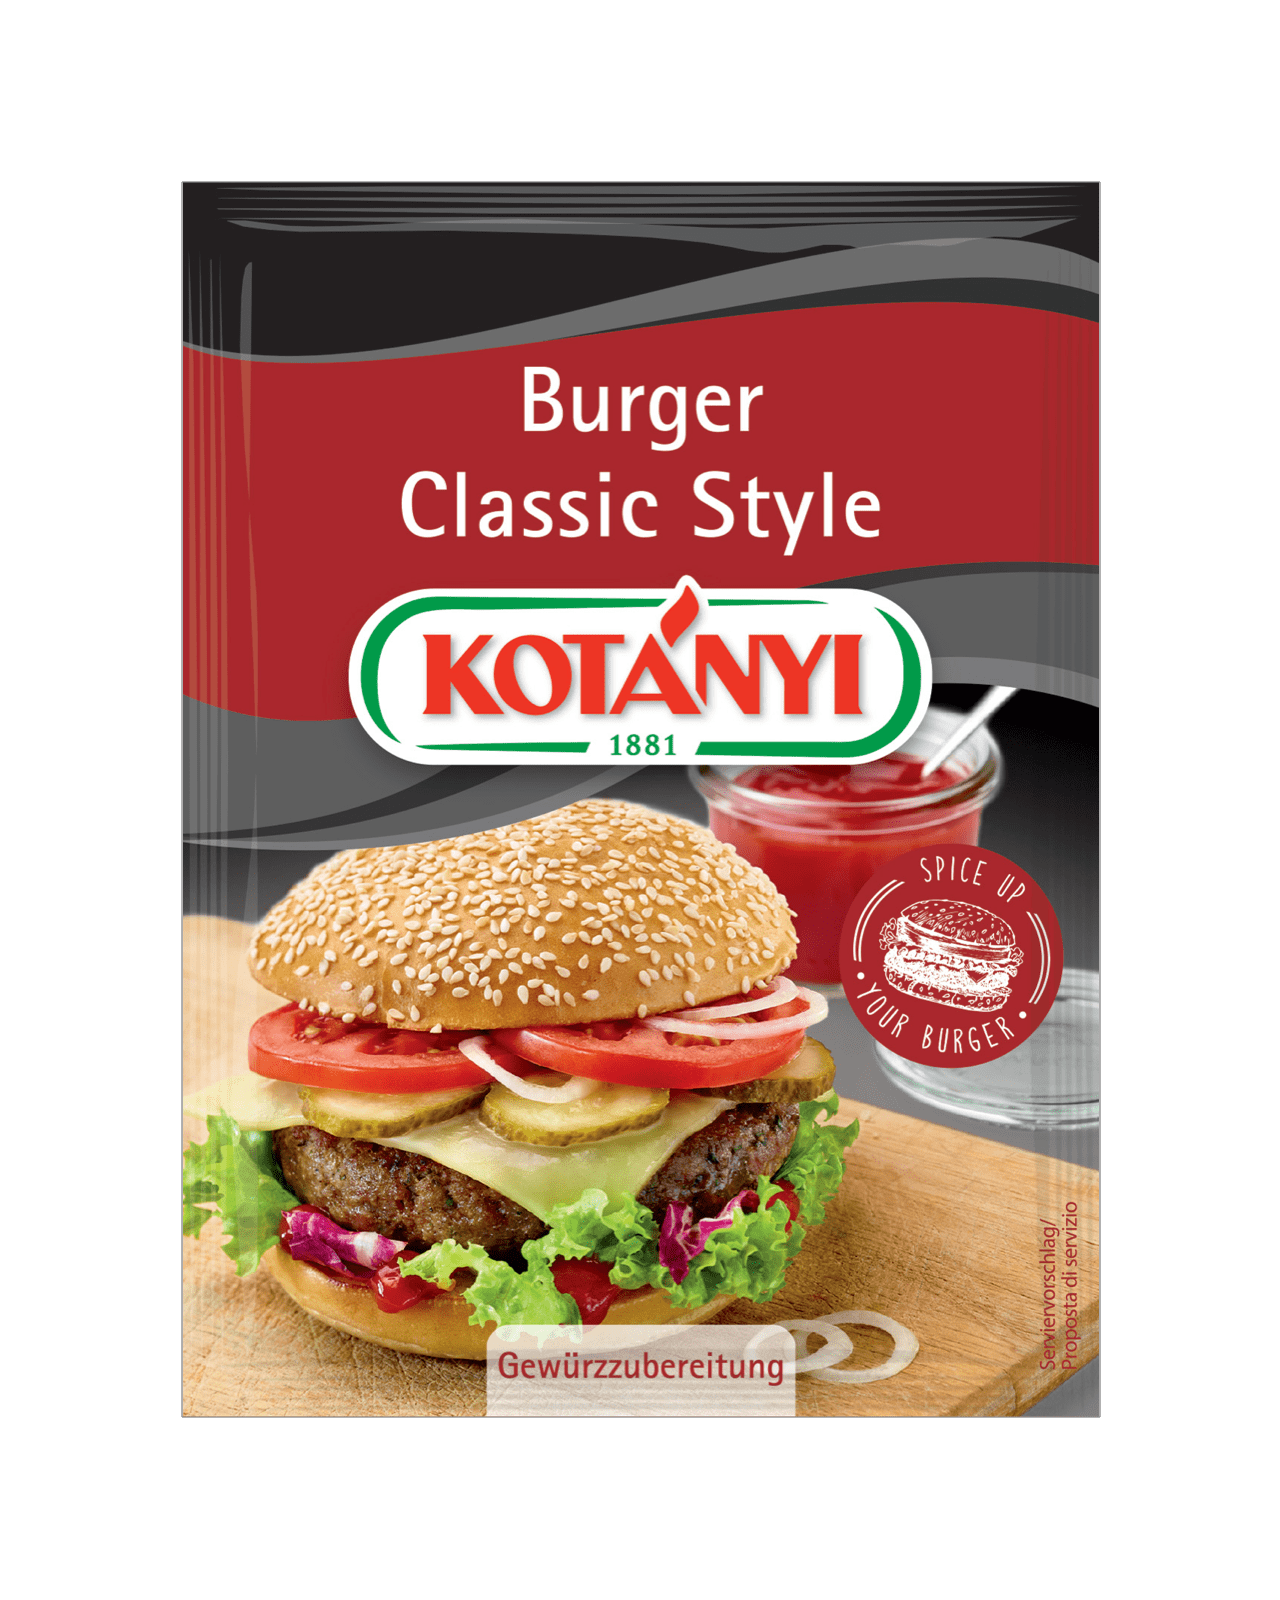 Kotányi Burger Classic Style im Brief